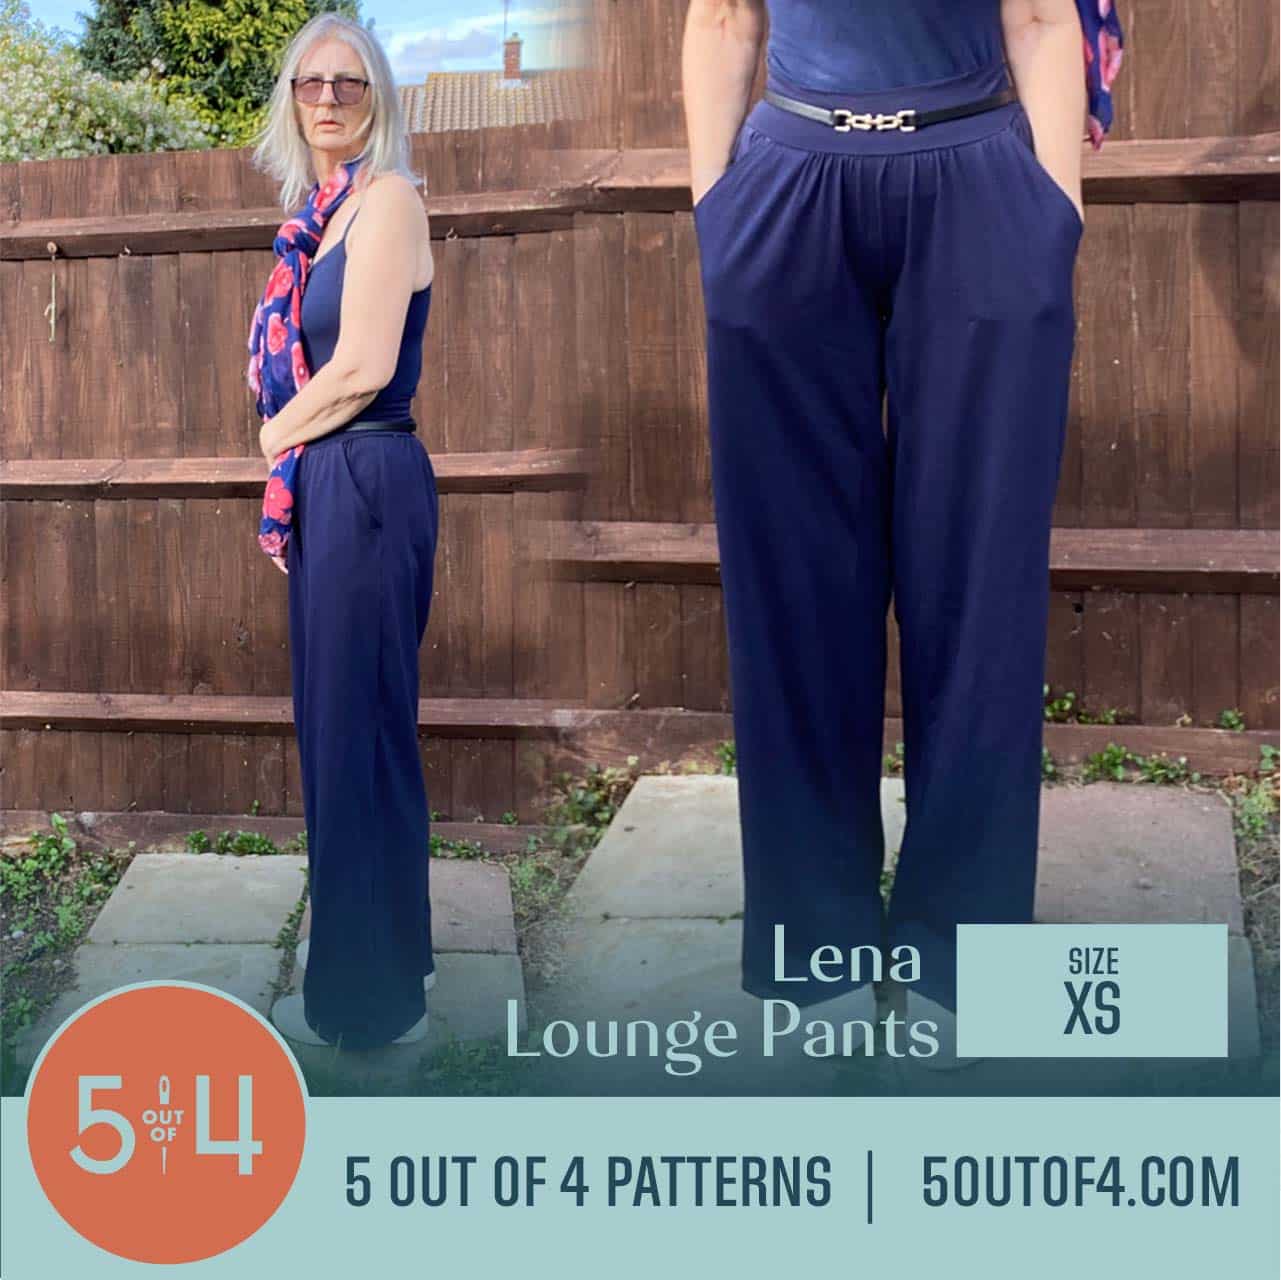 Loungie Pants